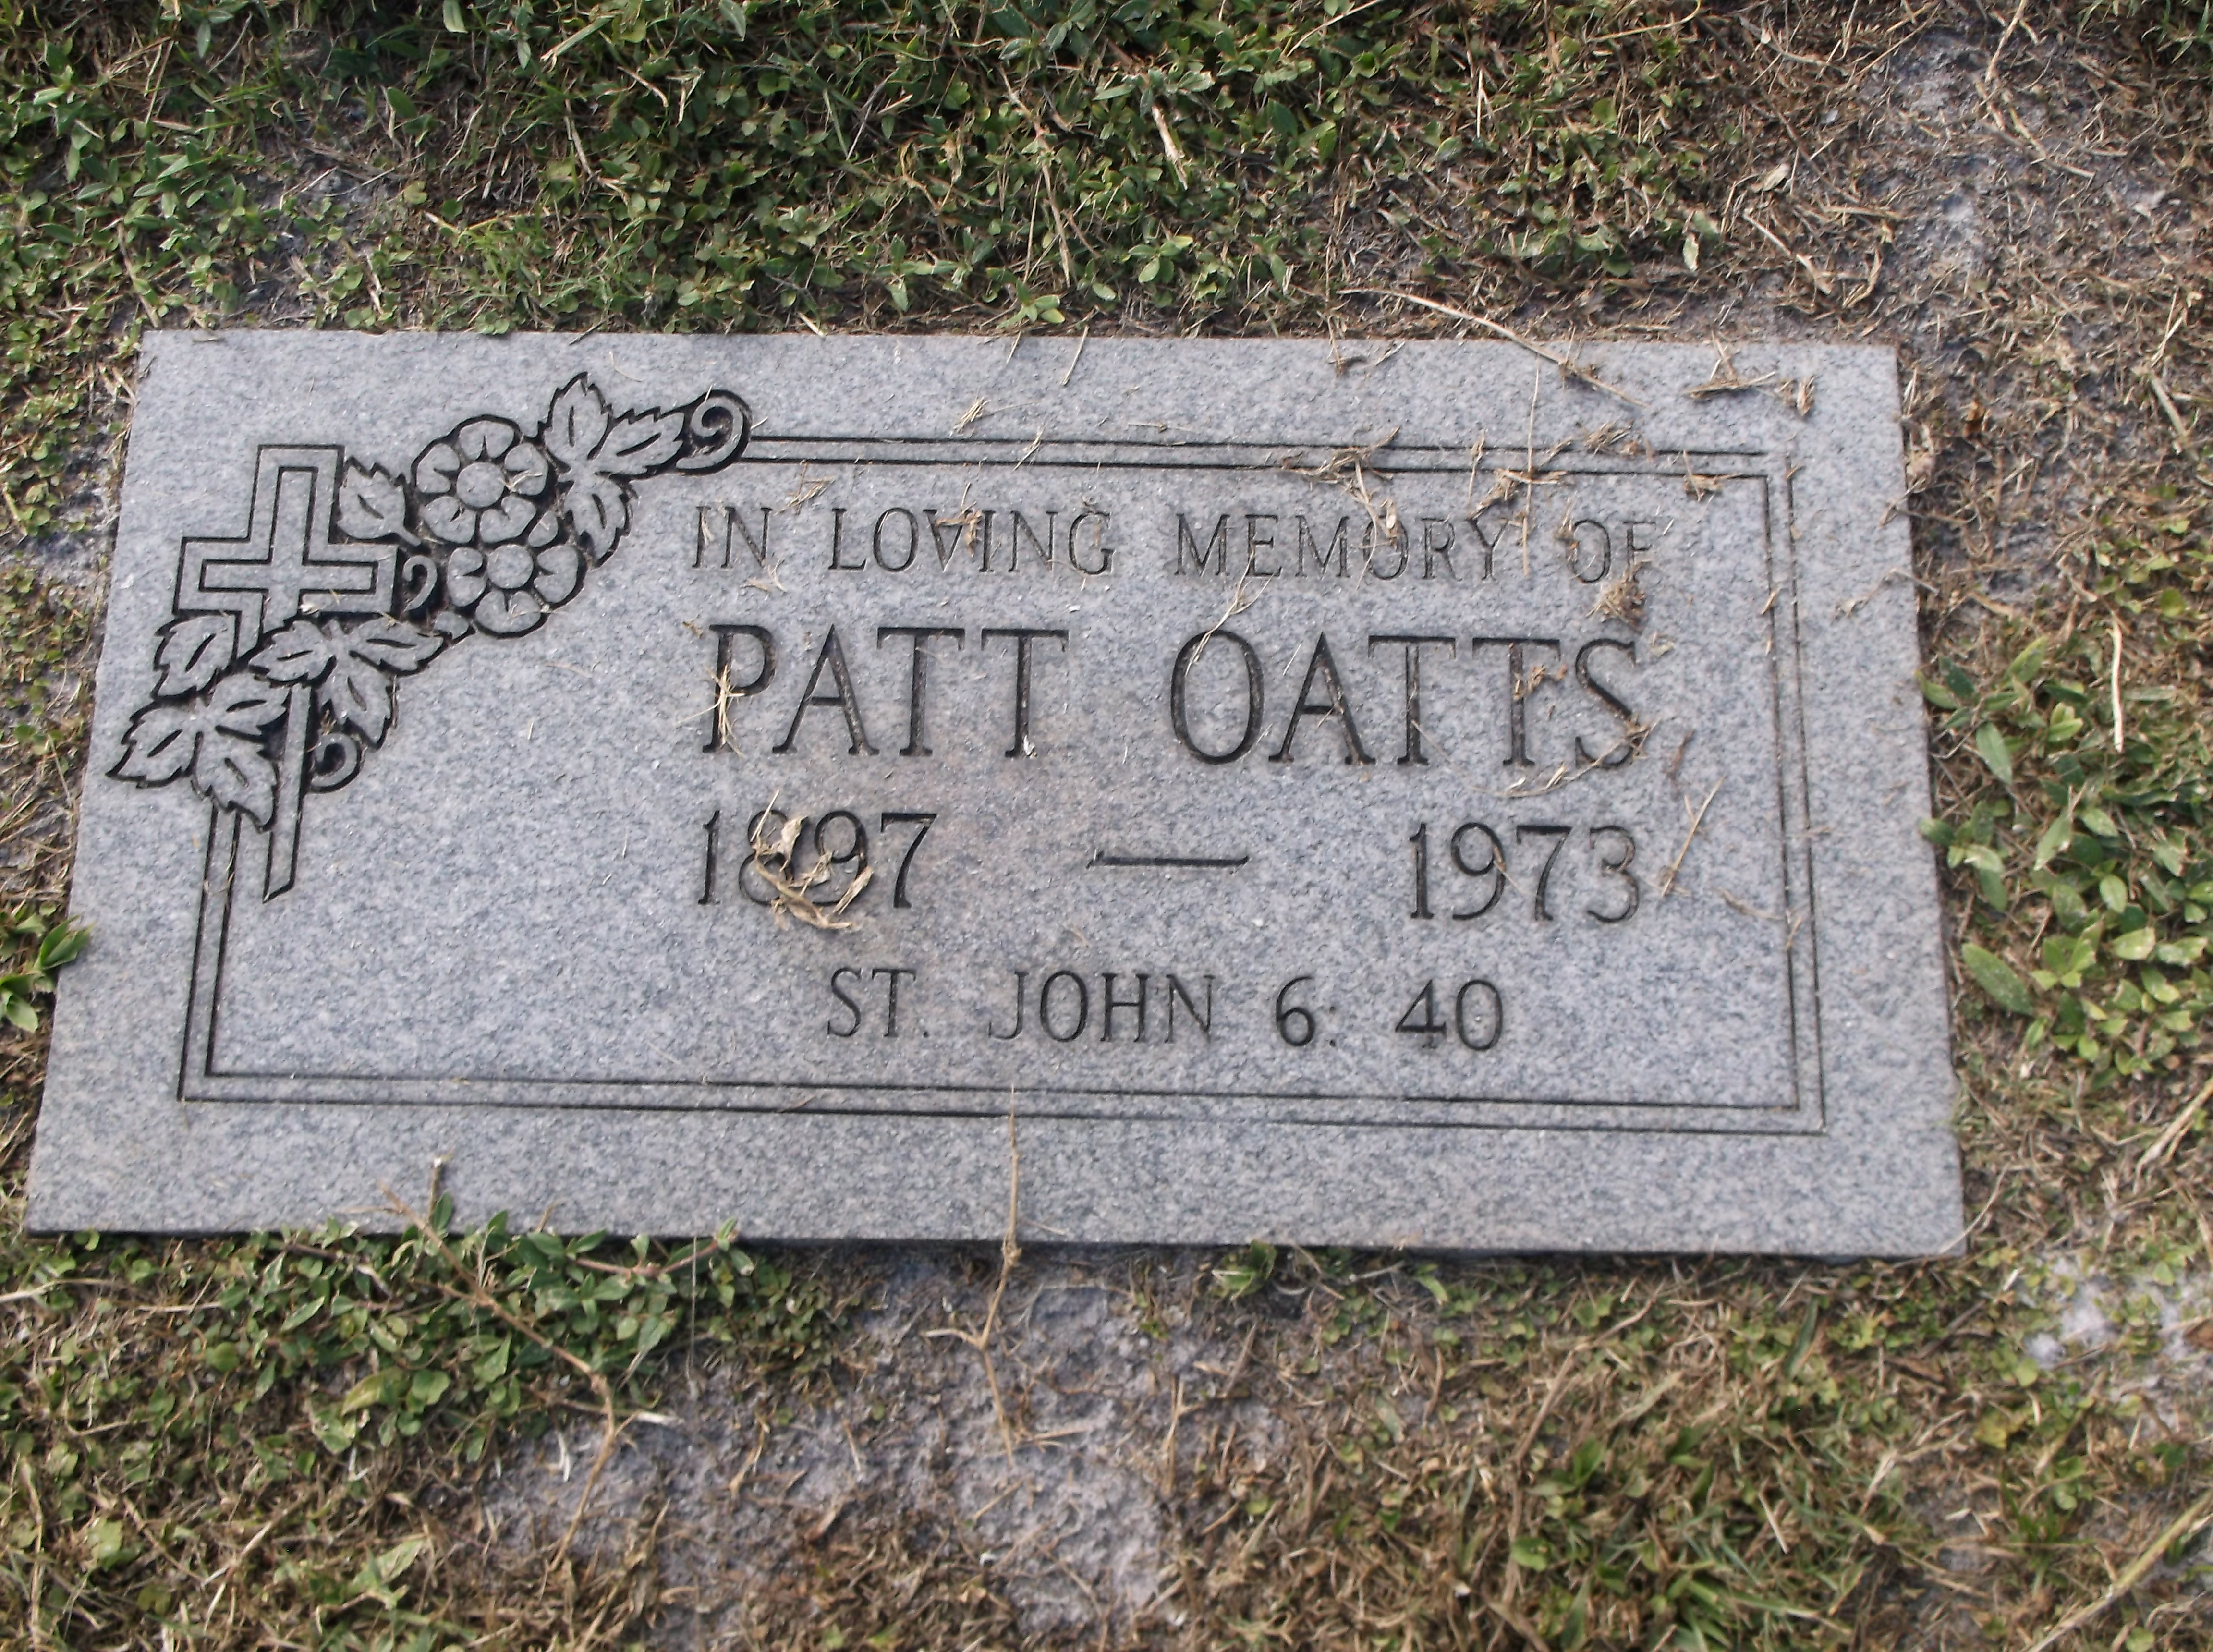 Patt Oatts